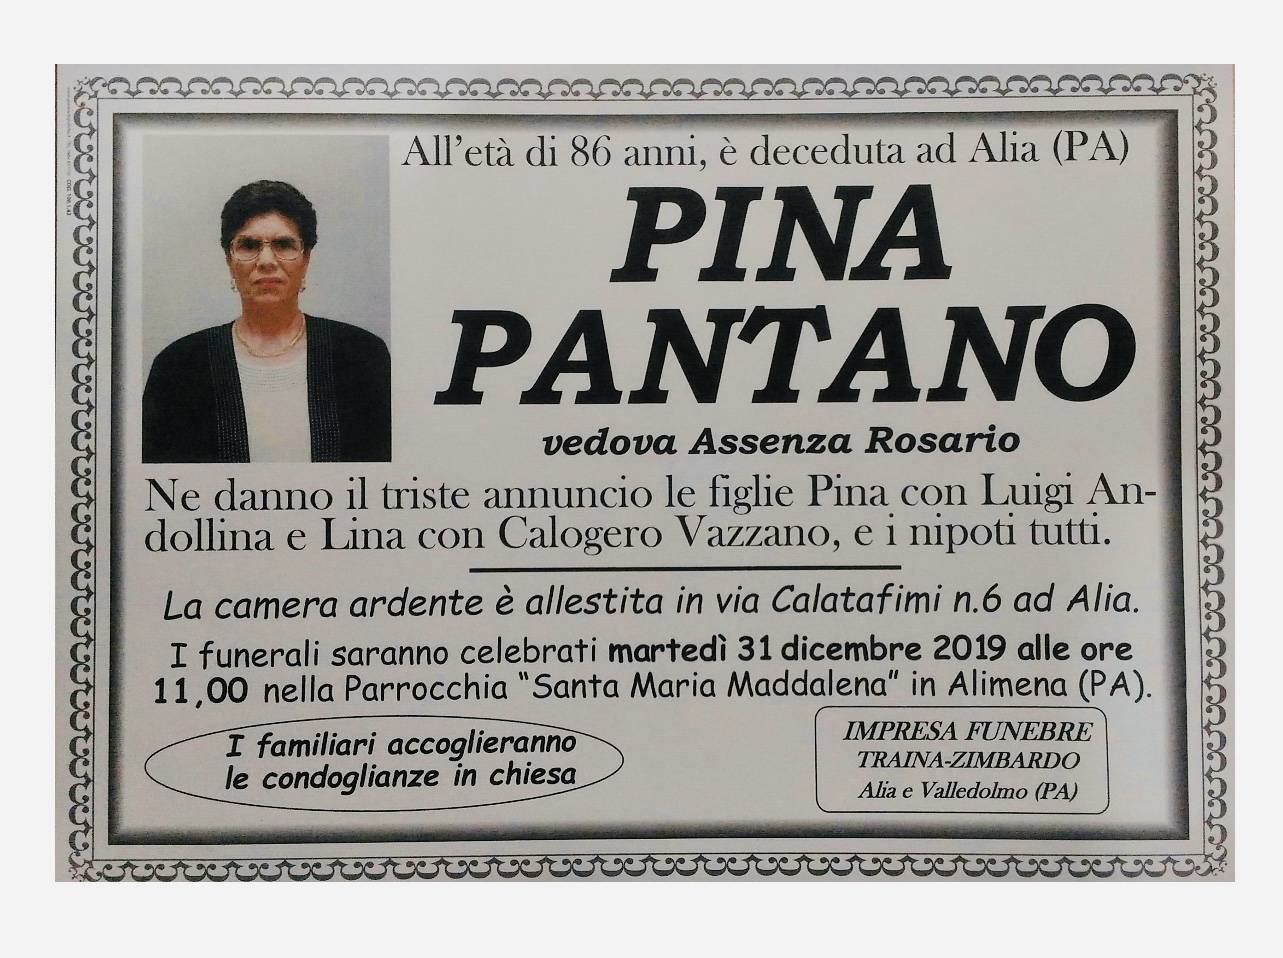 Giuseppa Pantano